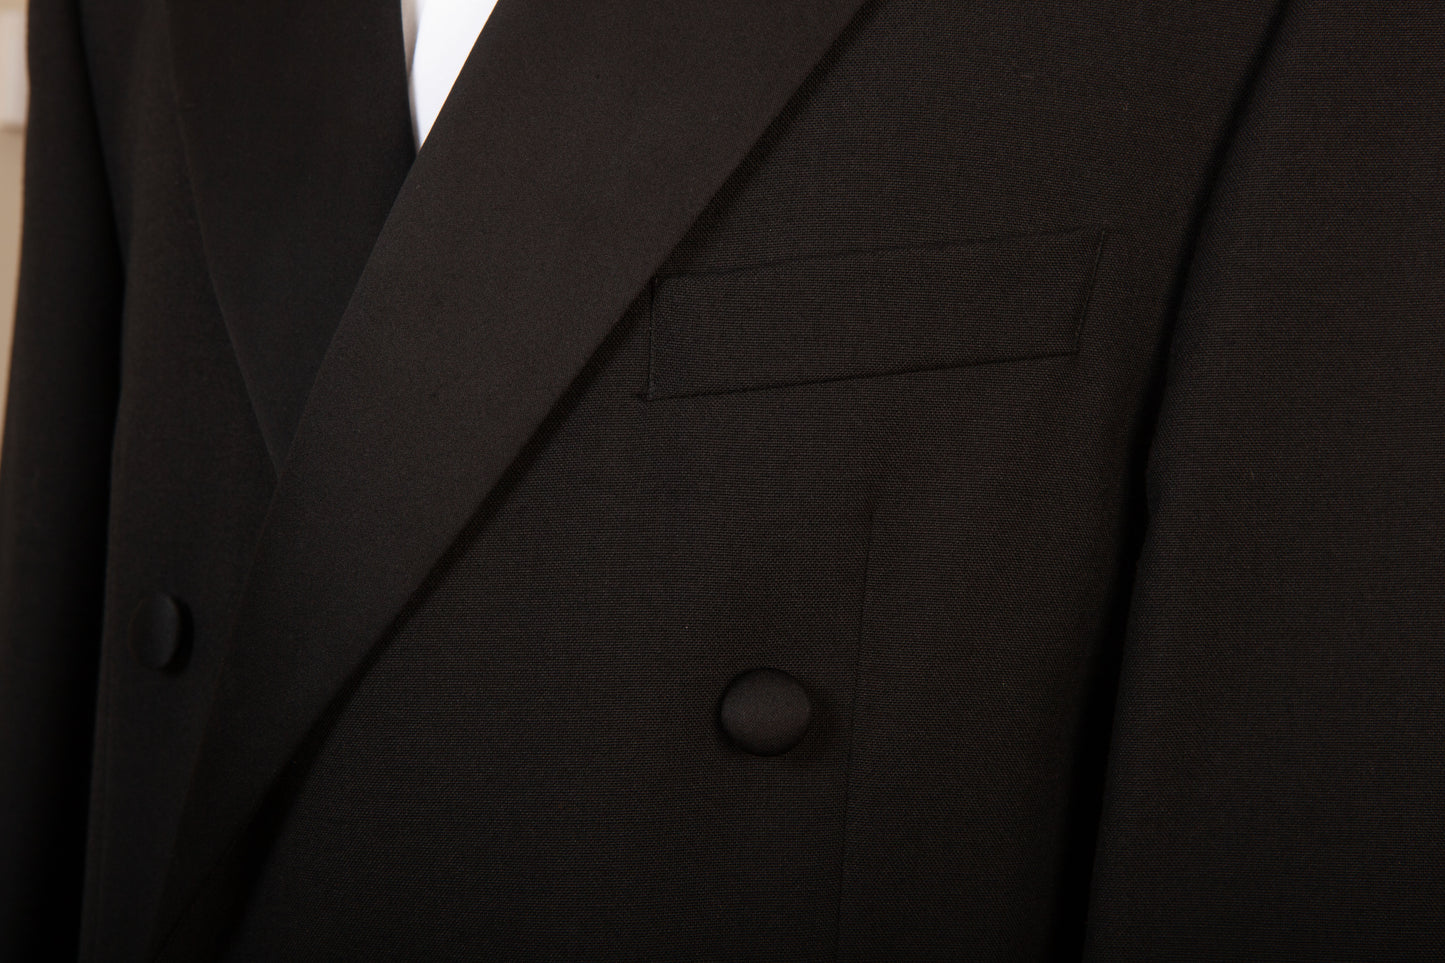 Black Double Breasted Tuxedo Jacket - Ex Hire